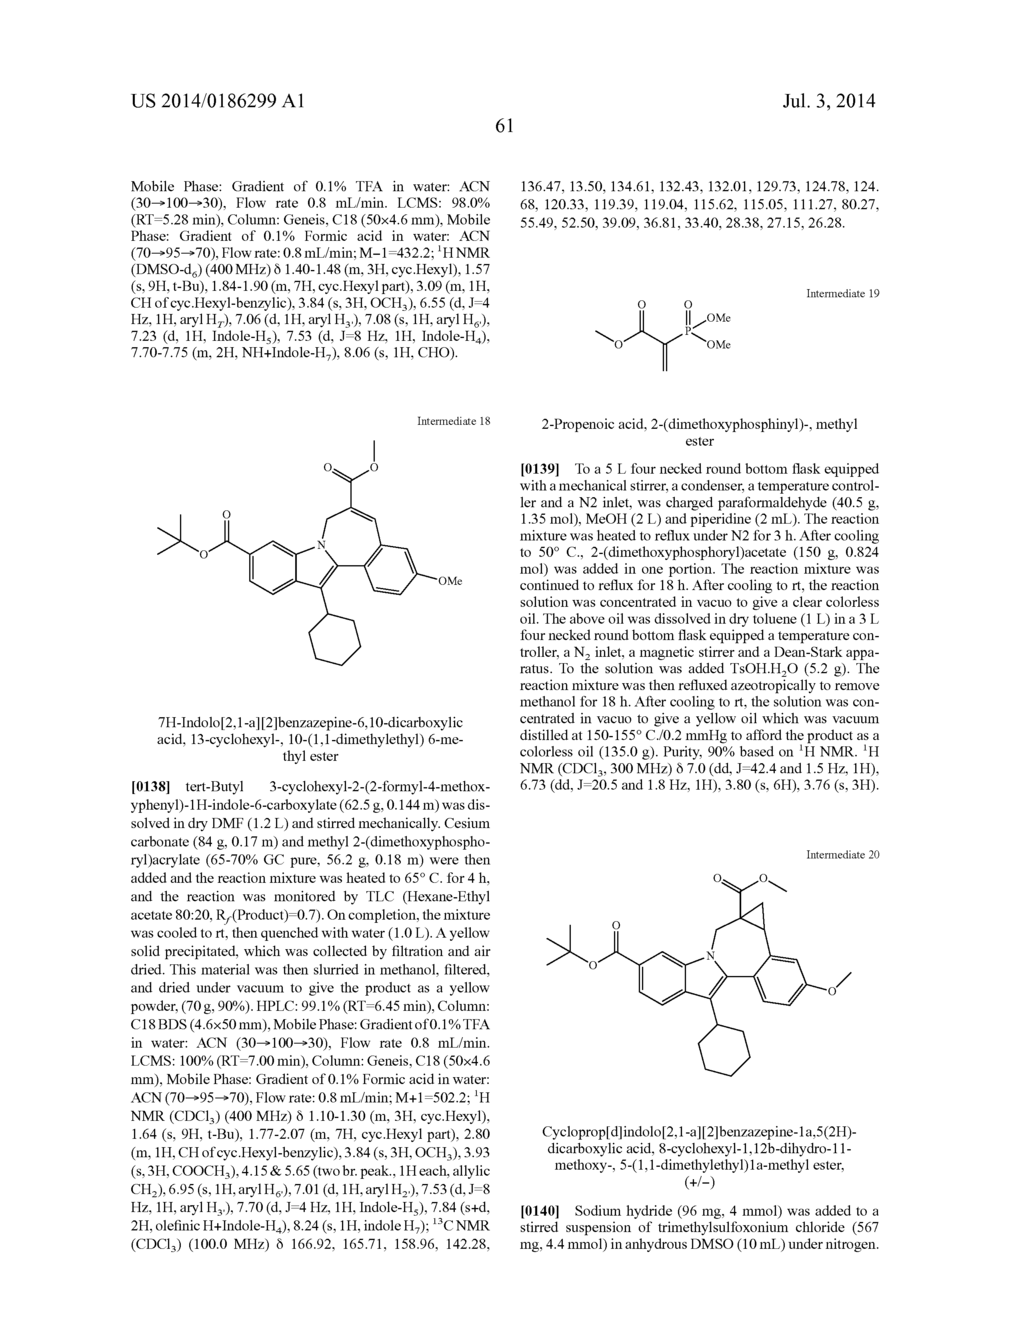 Cyclopropyl Fused Indolobenzazepine HCV NS5B Inhibitors - diagram, schematic, and image 62